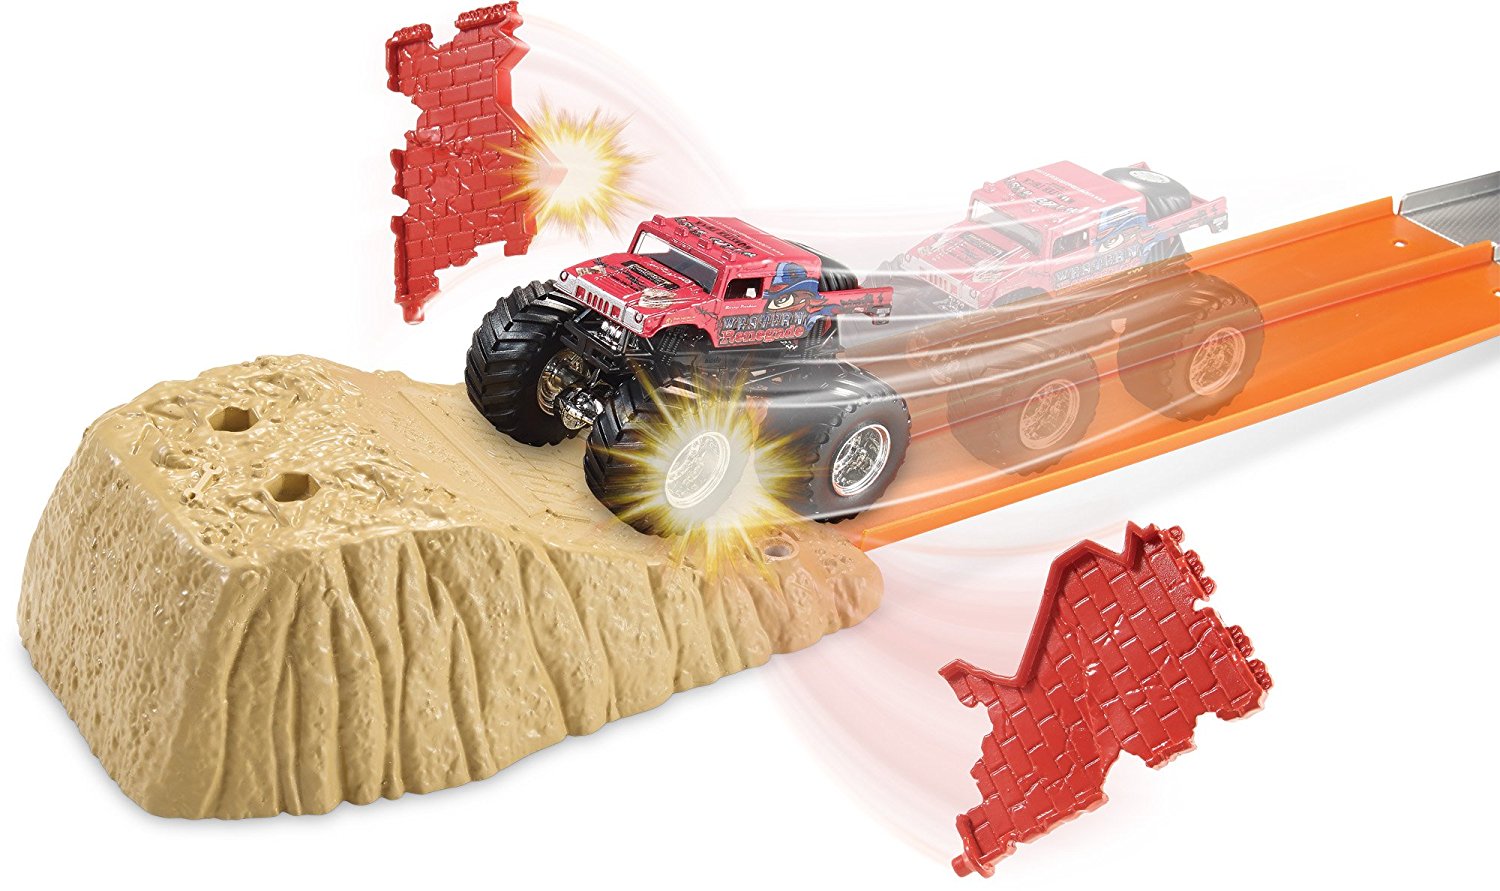 Hot Wheels Monster Trucks Blast Station Playset – Square Imports